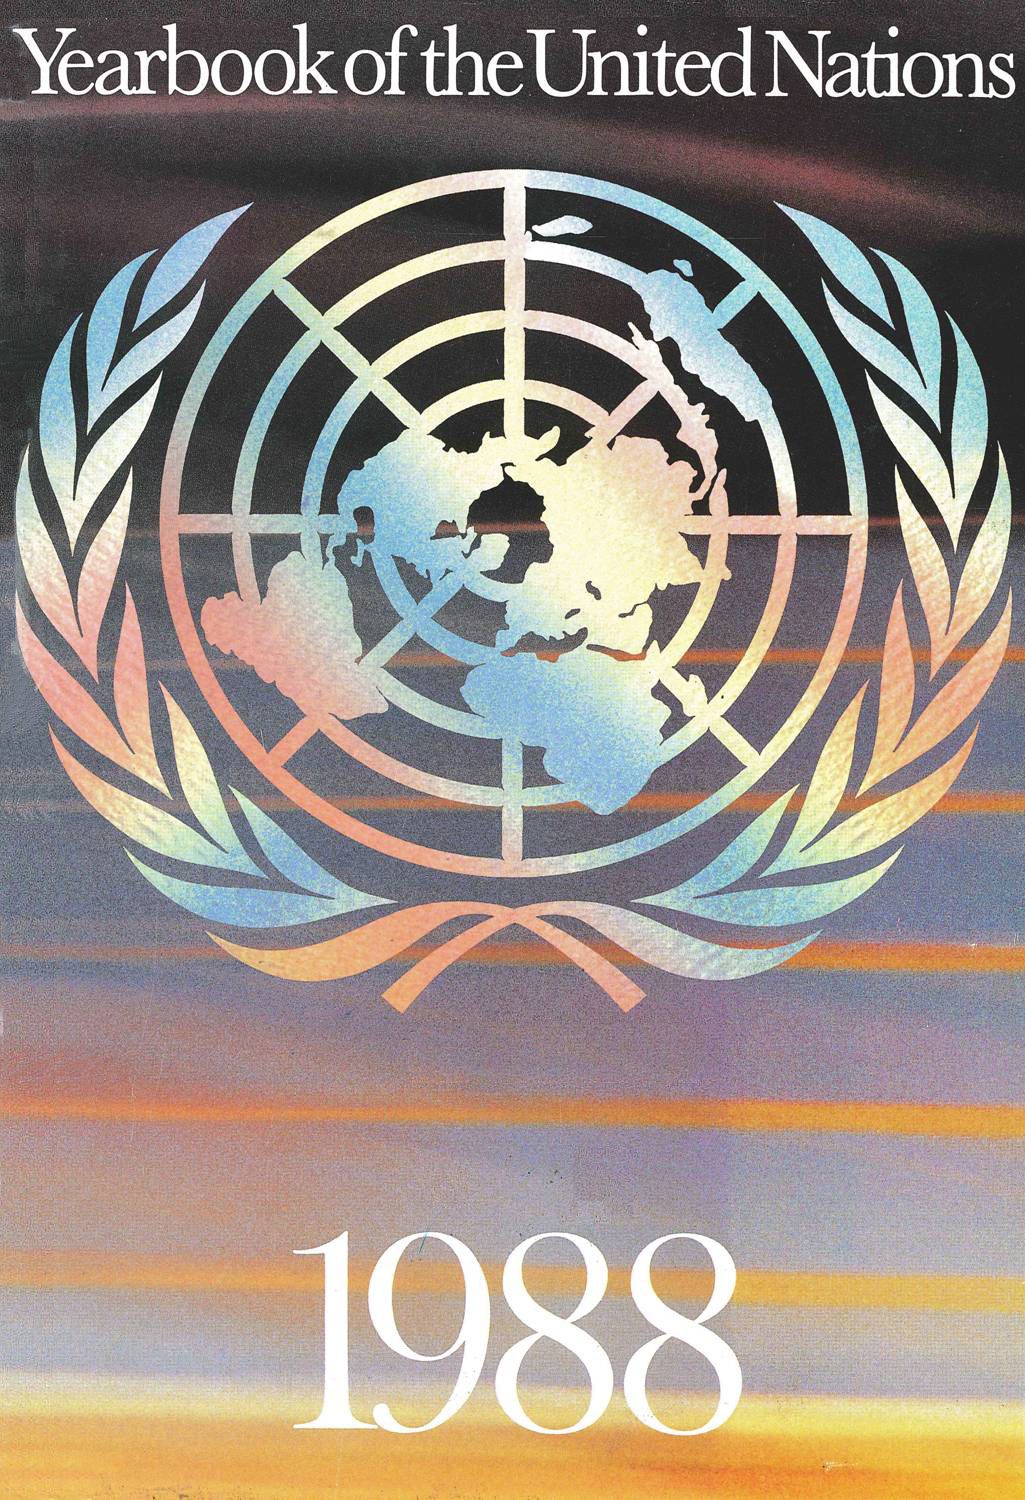 image of United Nations Industrial Development Organization (UNIDO)